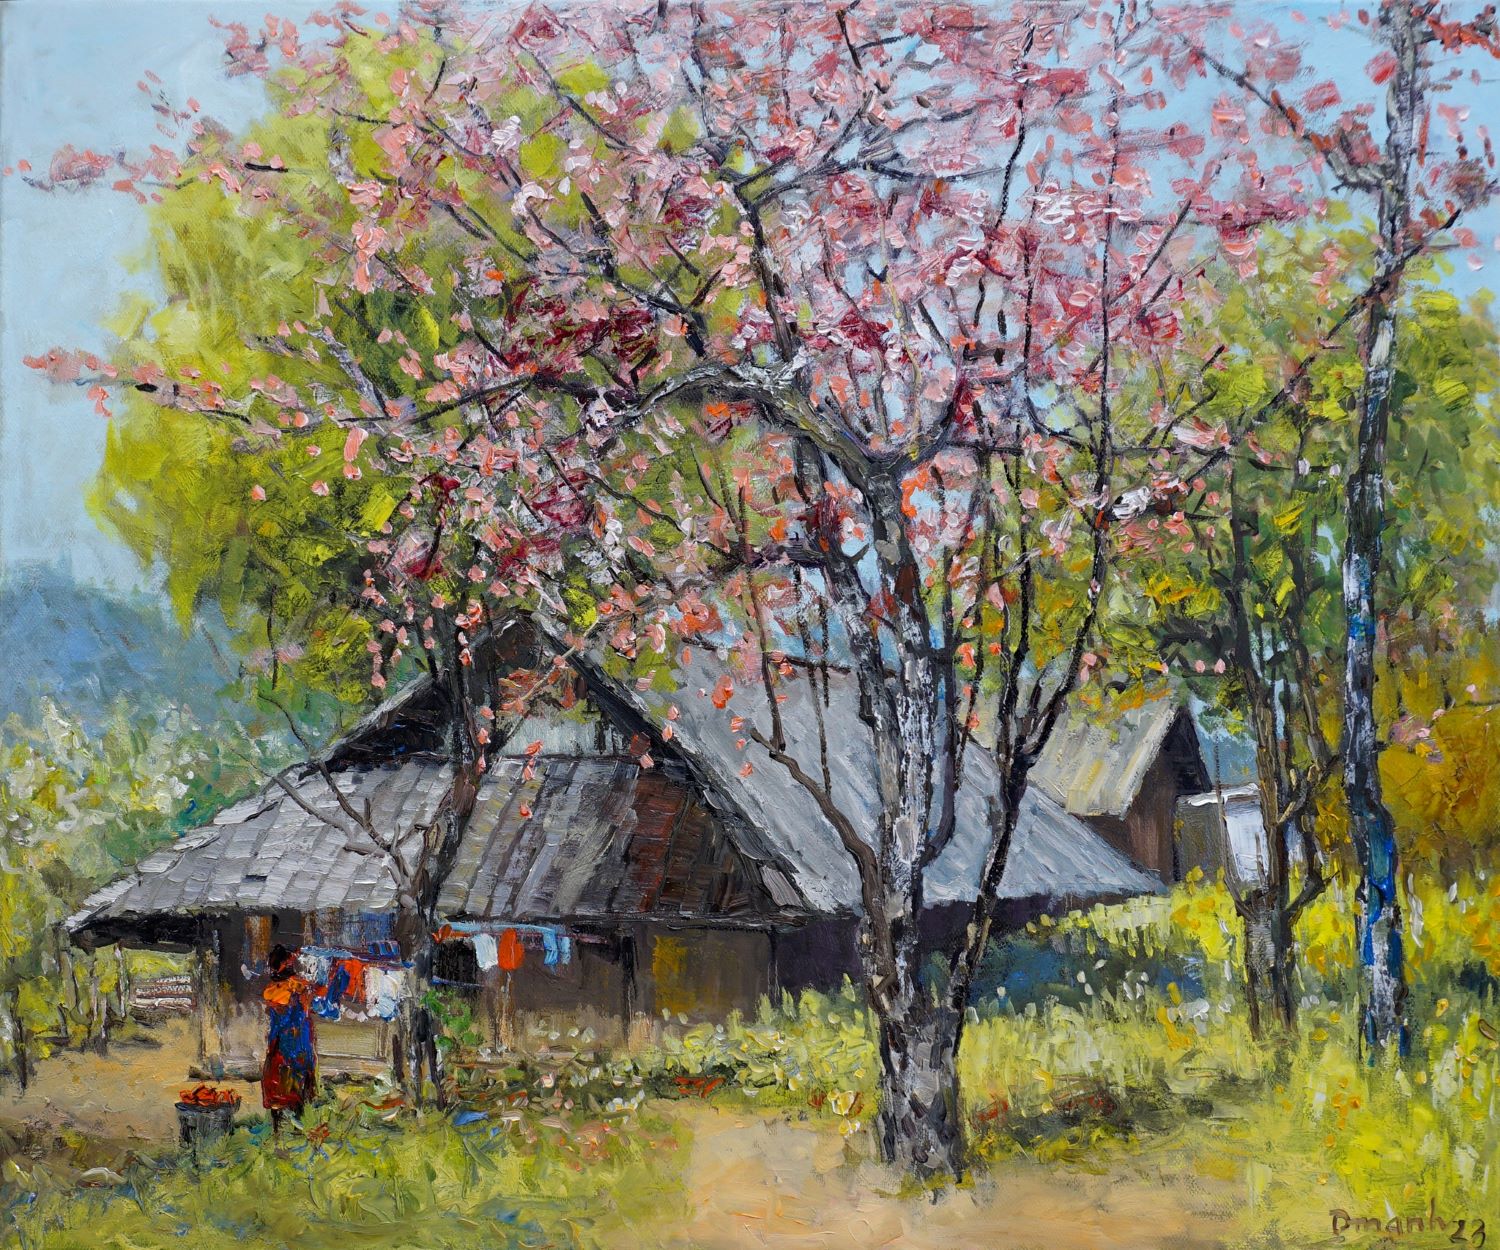 New Sunlight - Vietnamese Oil Painting by Artist Lam Duc Manh